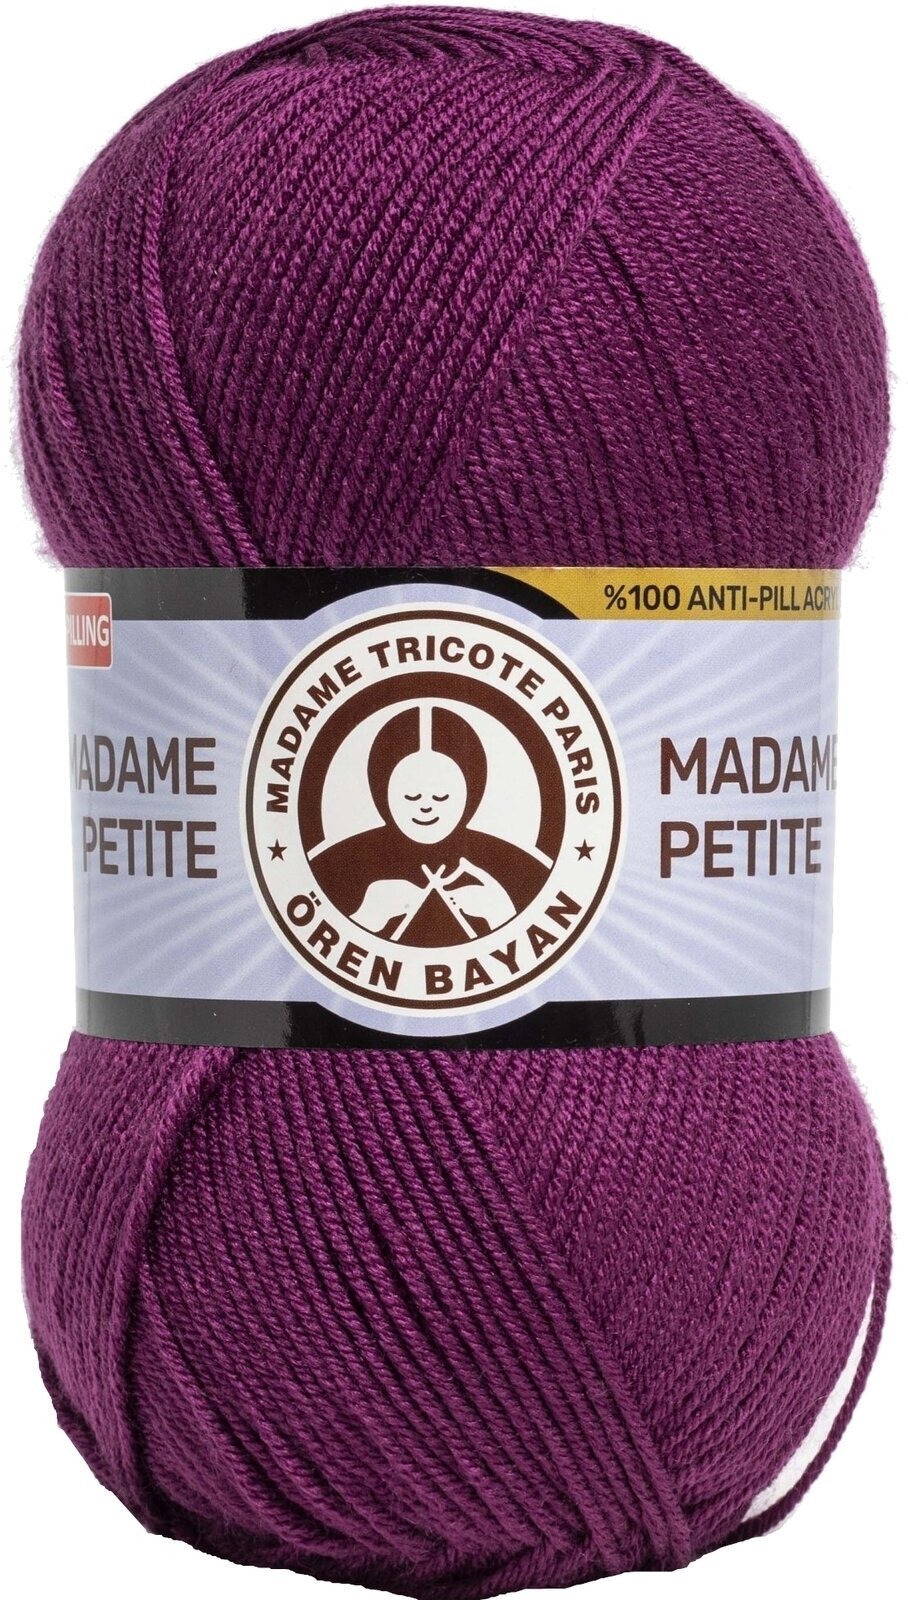 Fire de tricotat Madame Tricote Paris Madame Petite 3848 52 Fire de tricotat